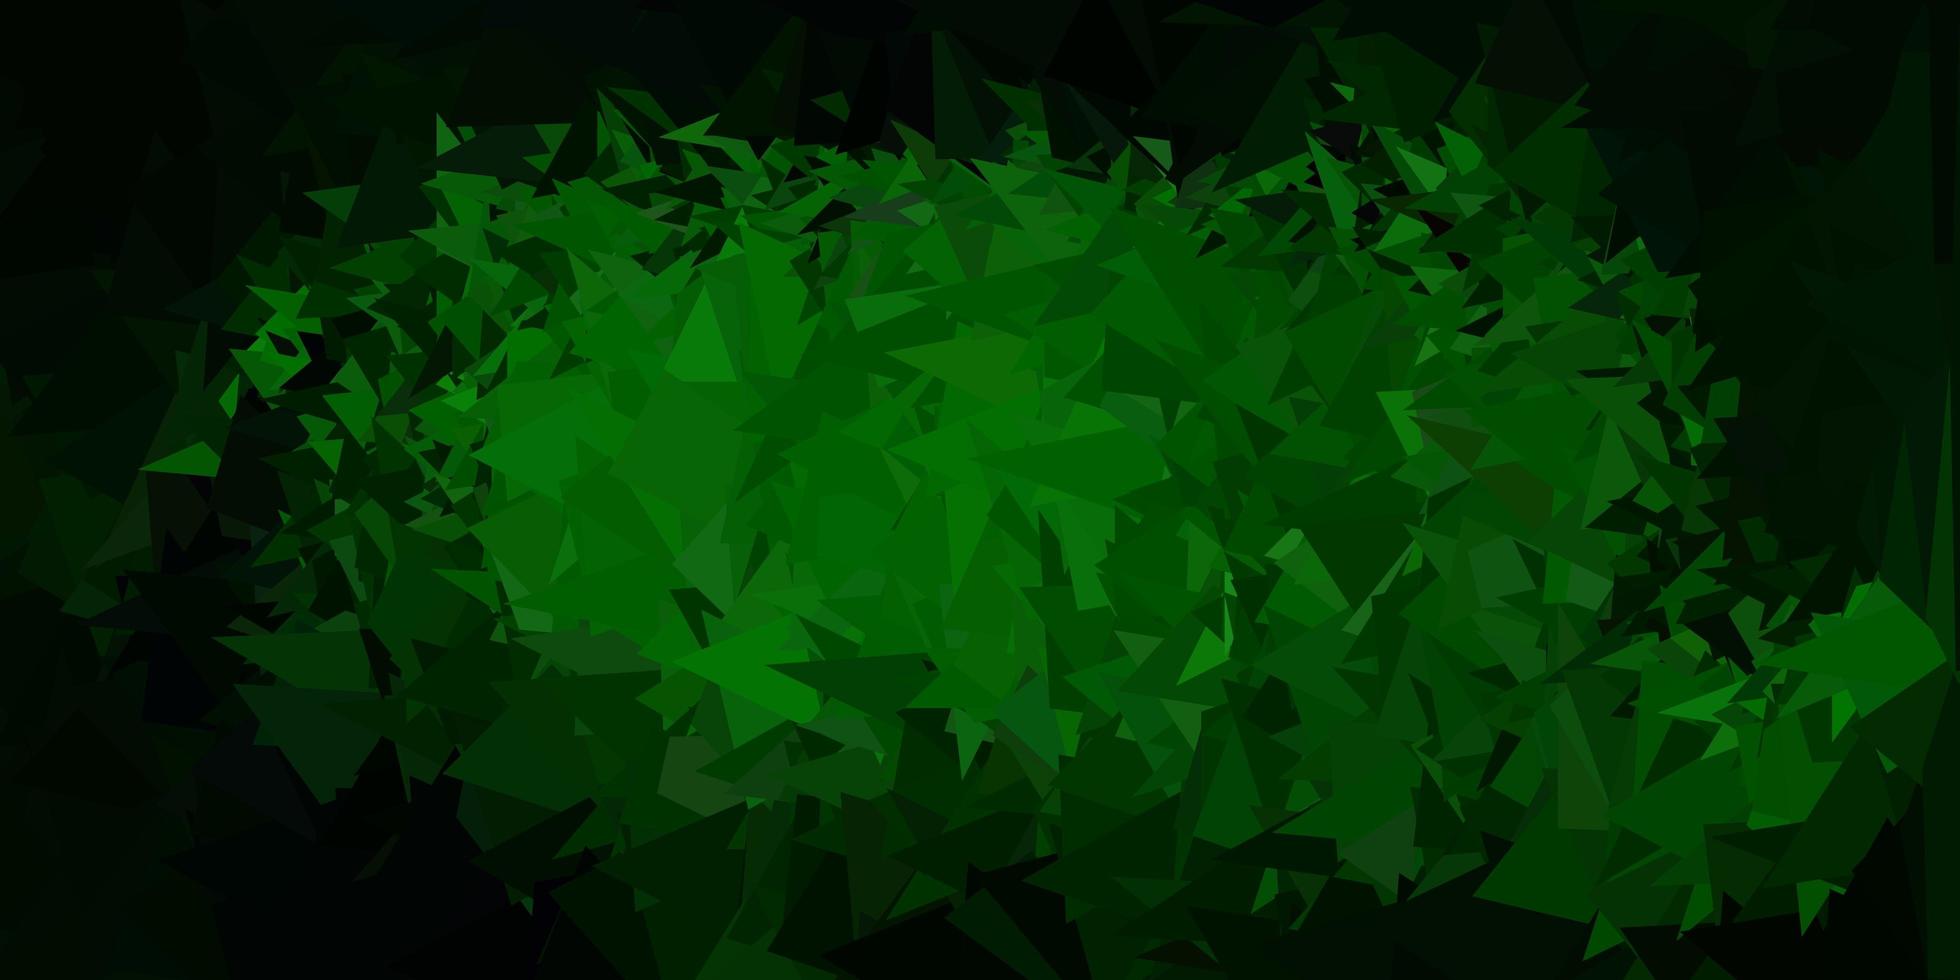 papel de parede poligonal geométrico de vetor verde escuro.